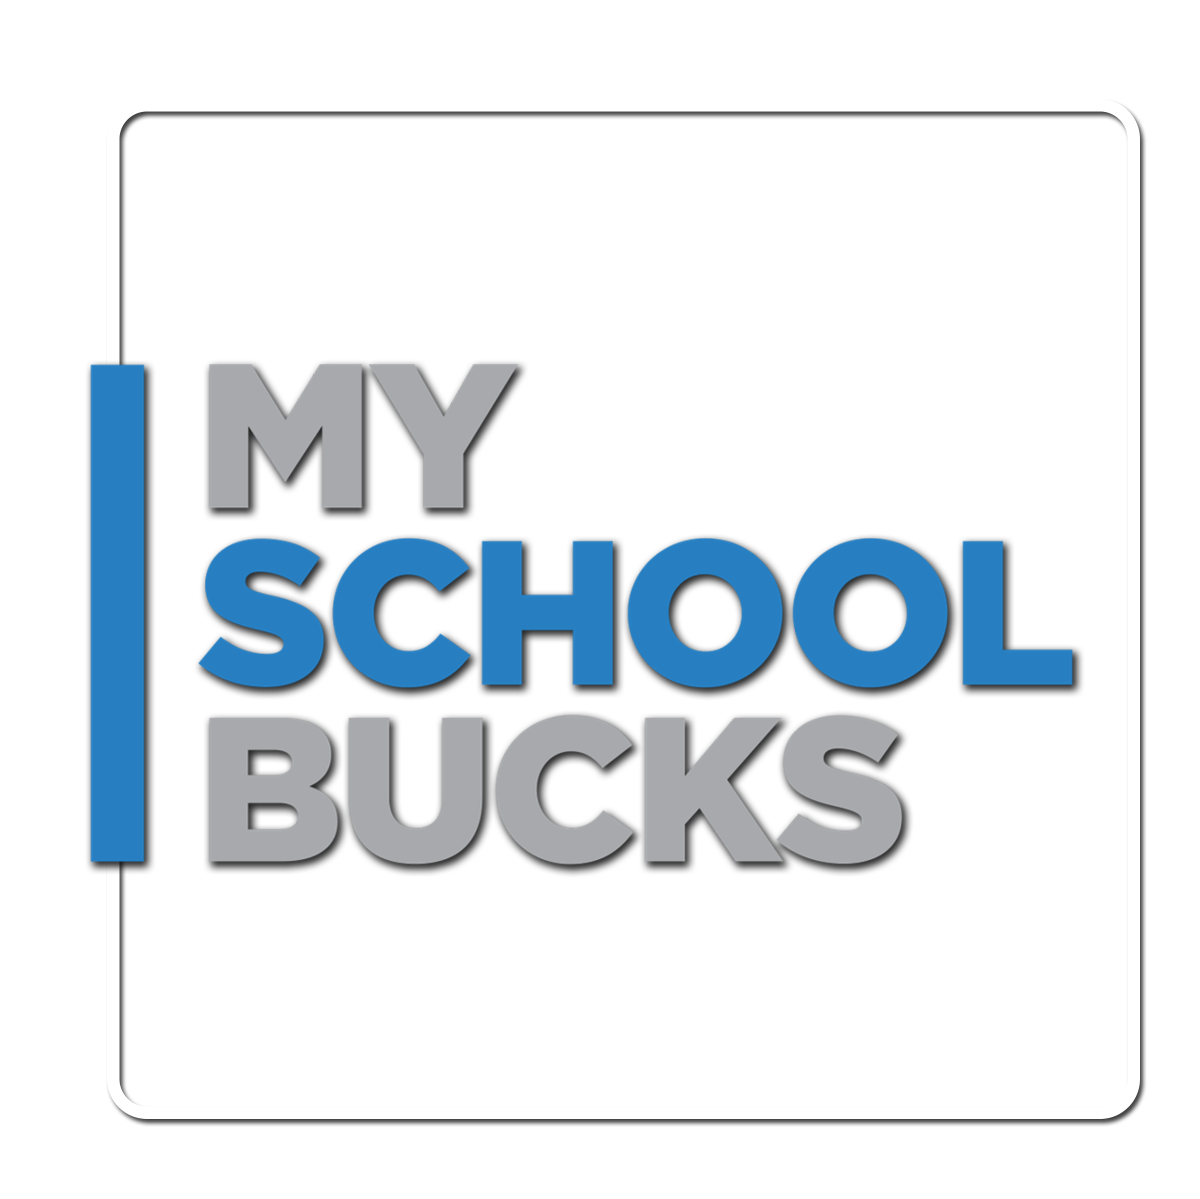 MySchoolBucks logo and button